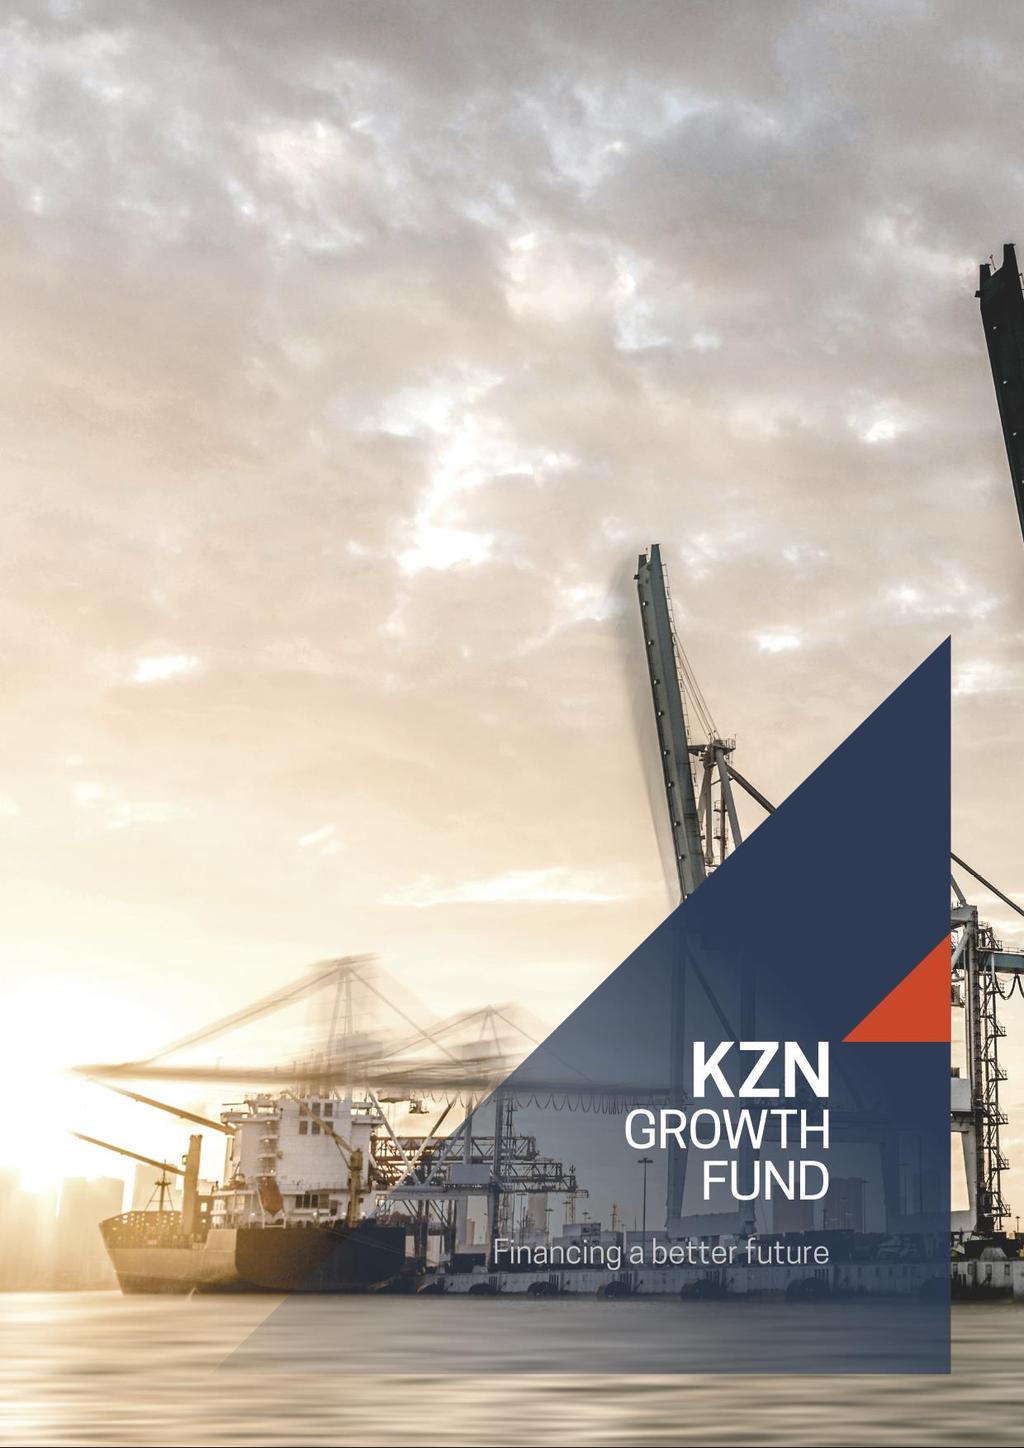 THE KZN GROWTH FUND TRUST